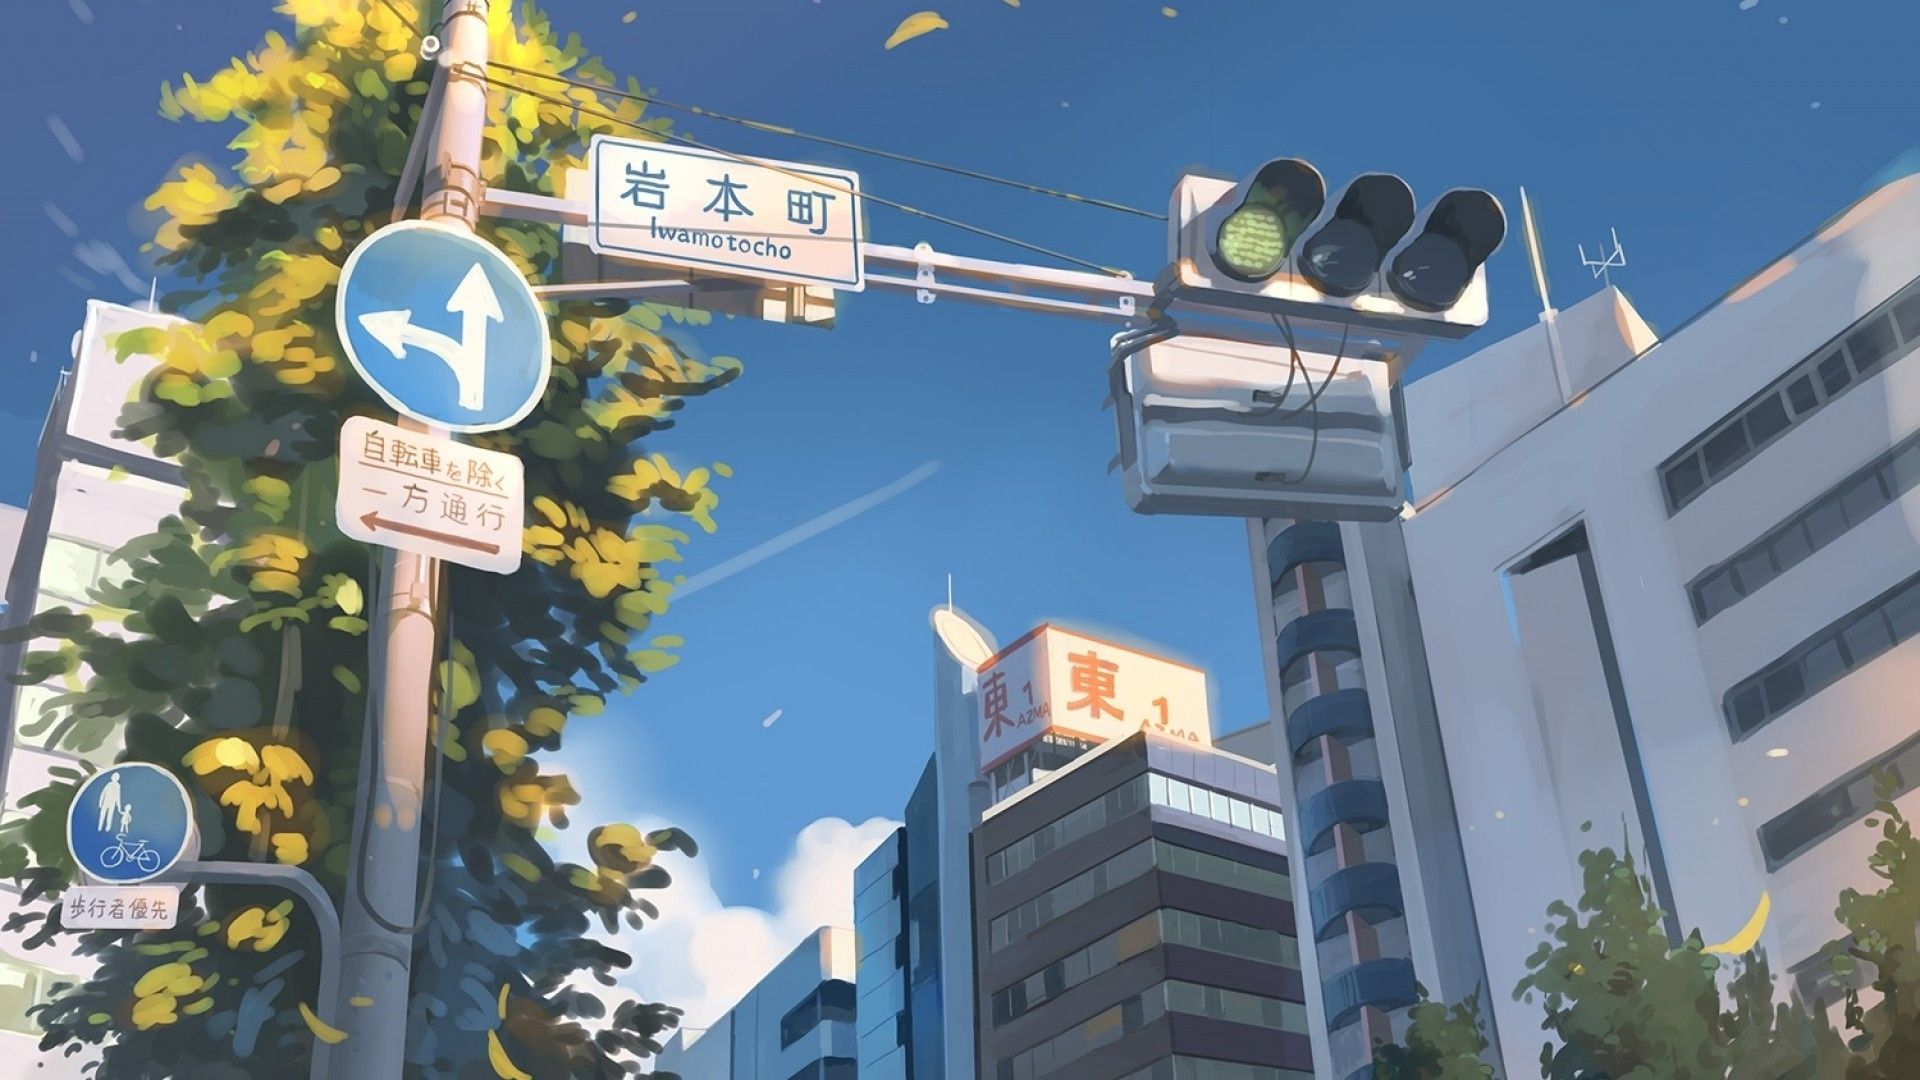 Download 1920x1080 Anime Landscape, City, Street, Buildings, Tree